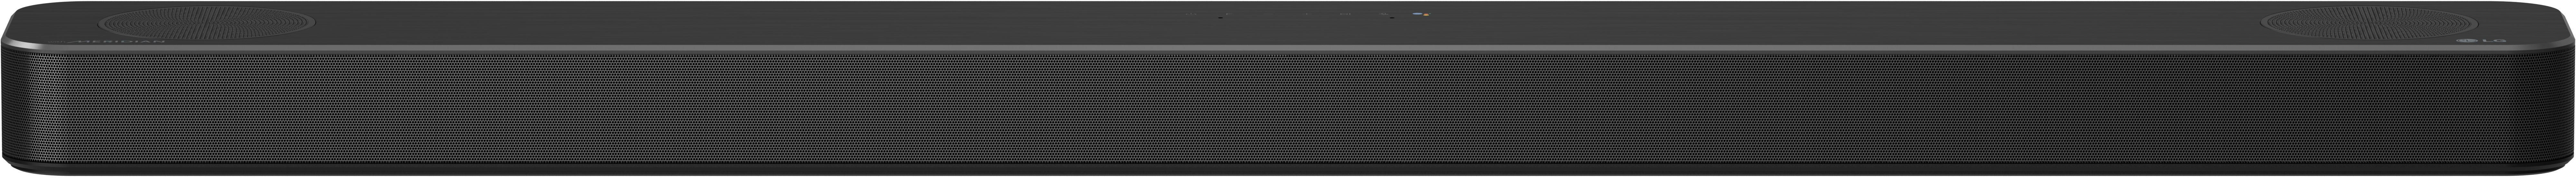 LG Dark Silver Soundbar, DSN8YG, Steel